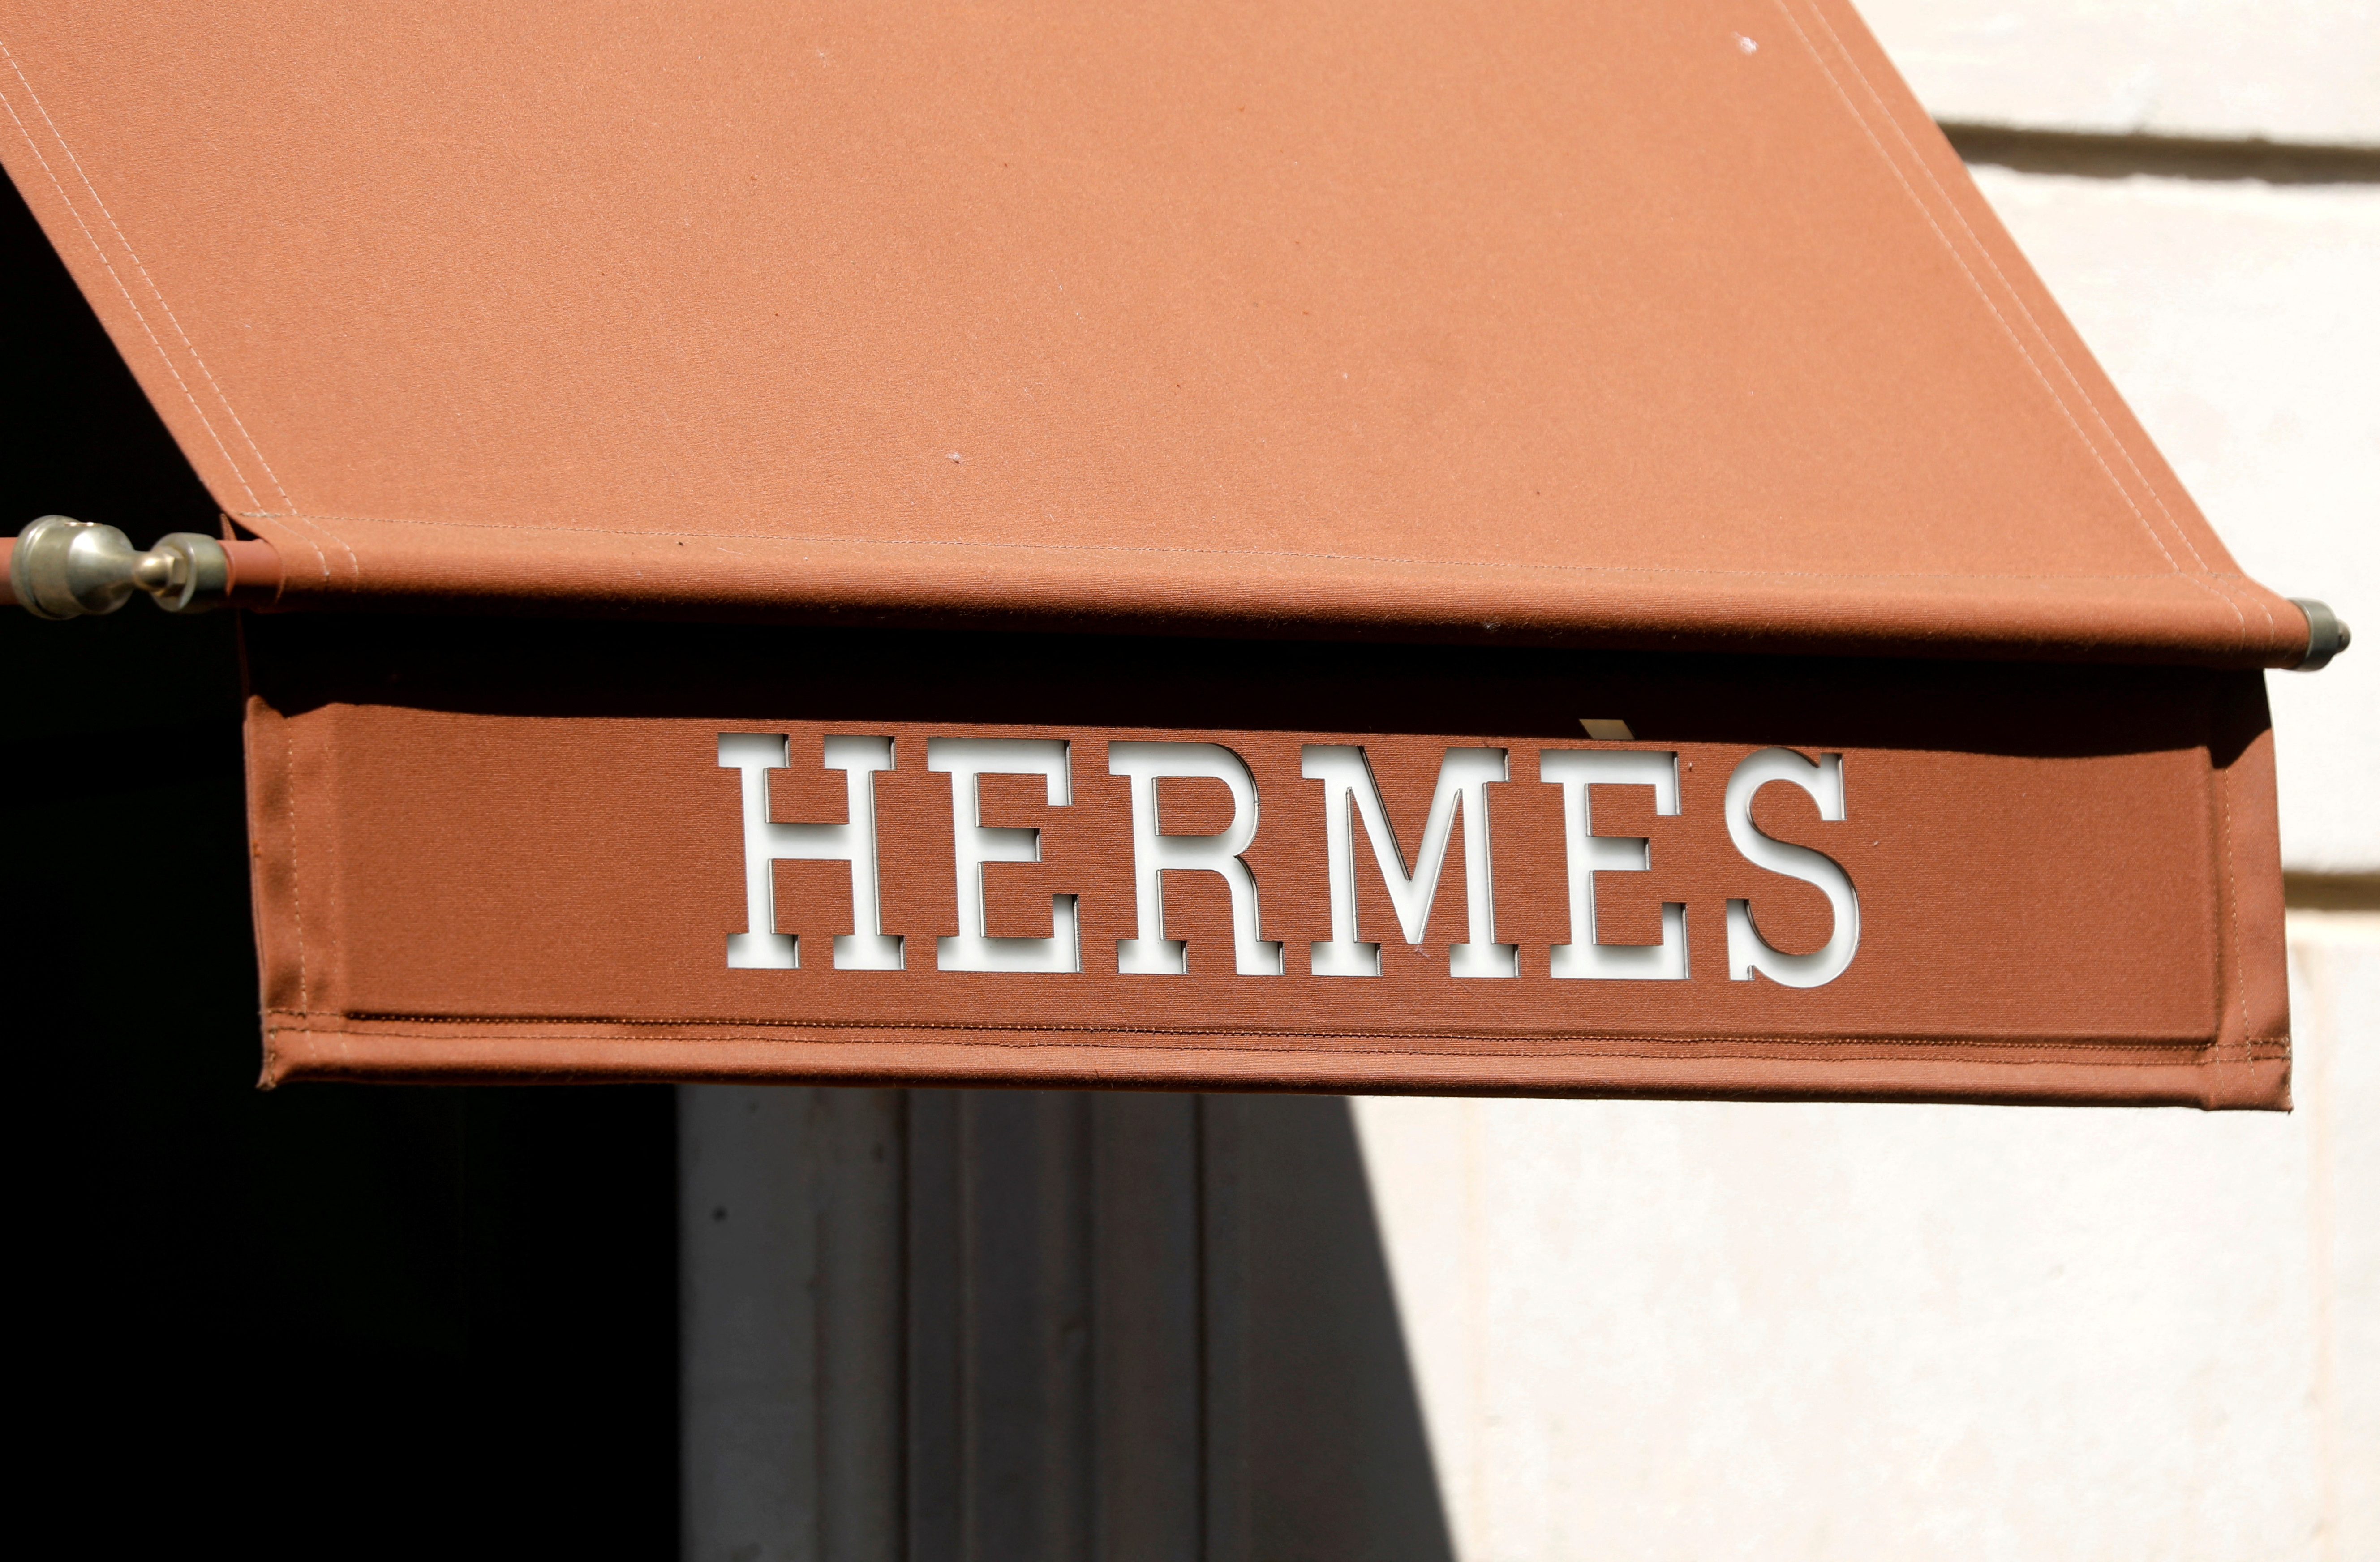 Hermes snubs luxury resale market